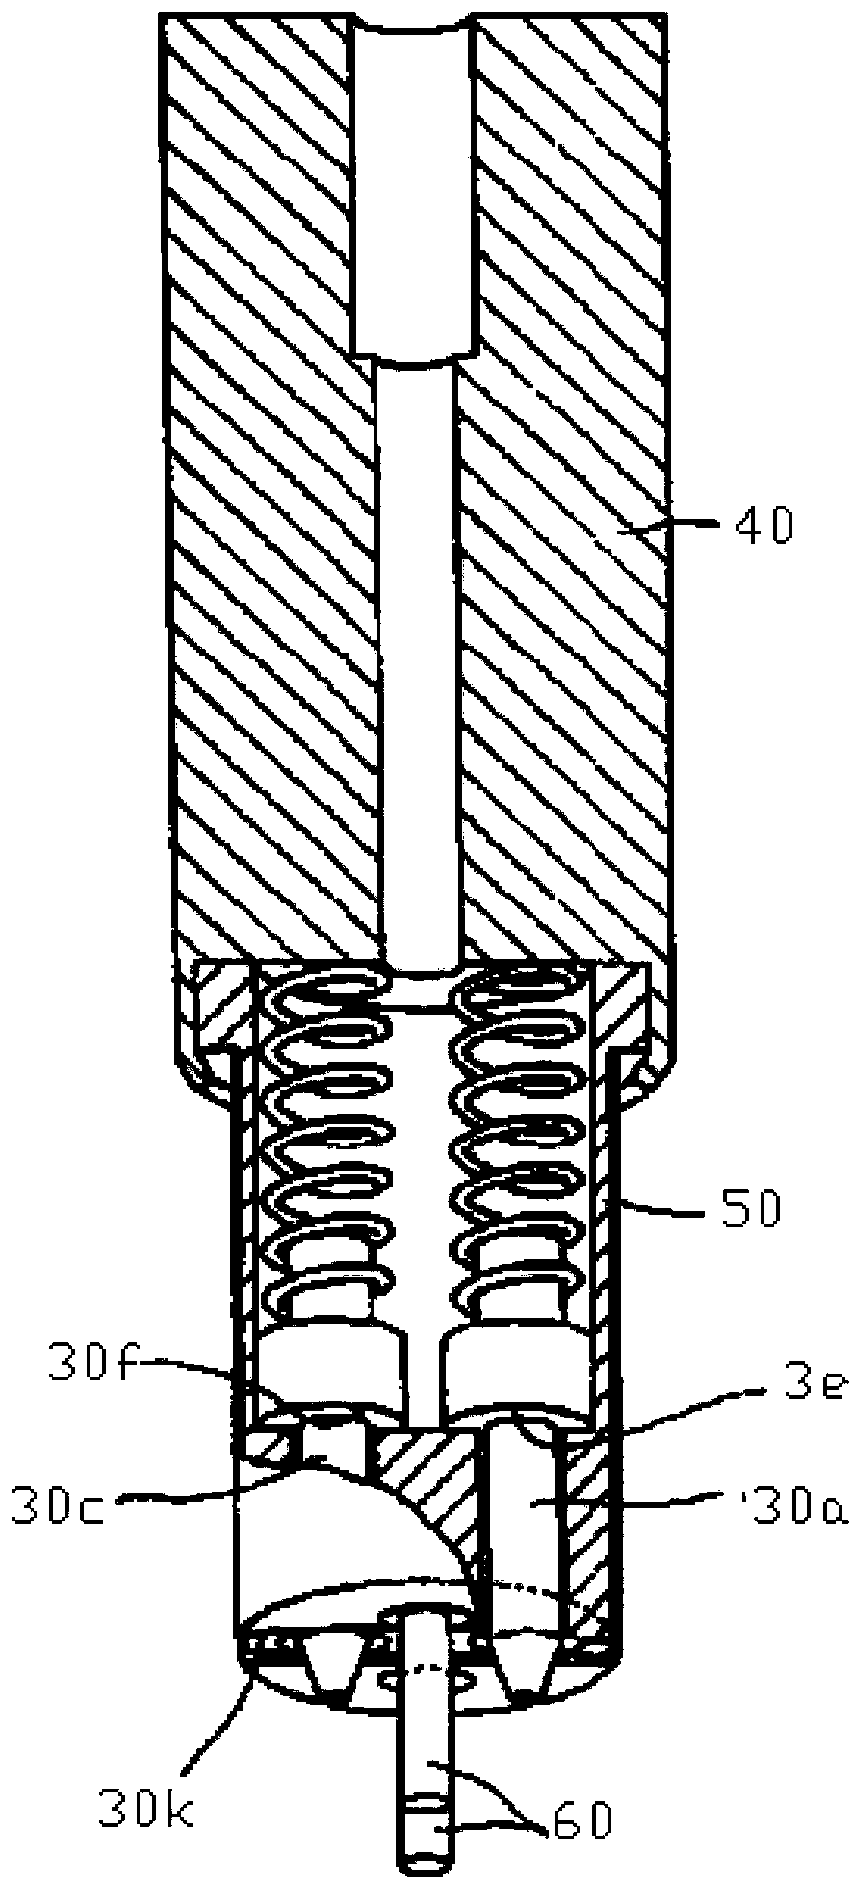 Two-way solenoid valve